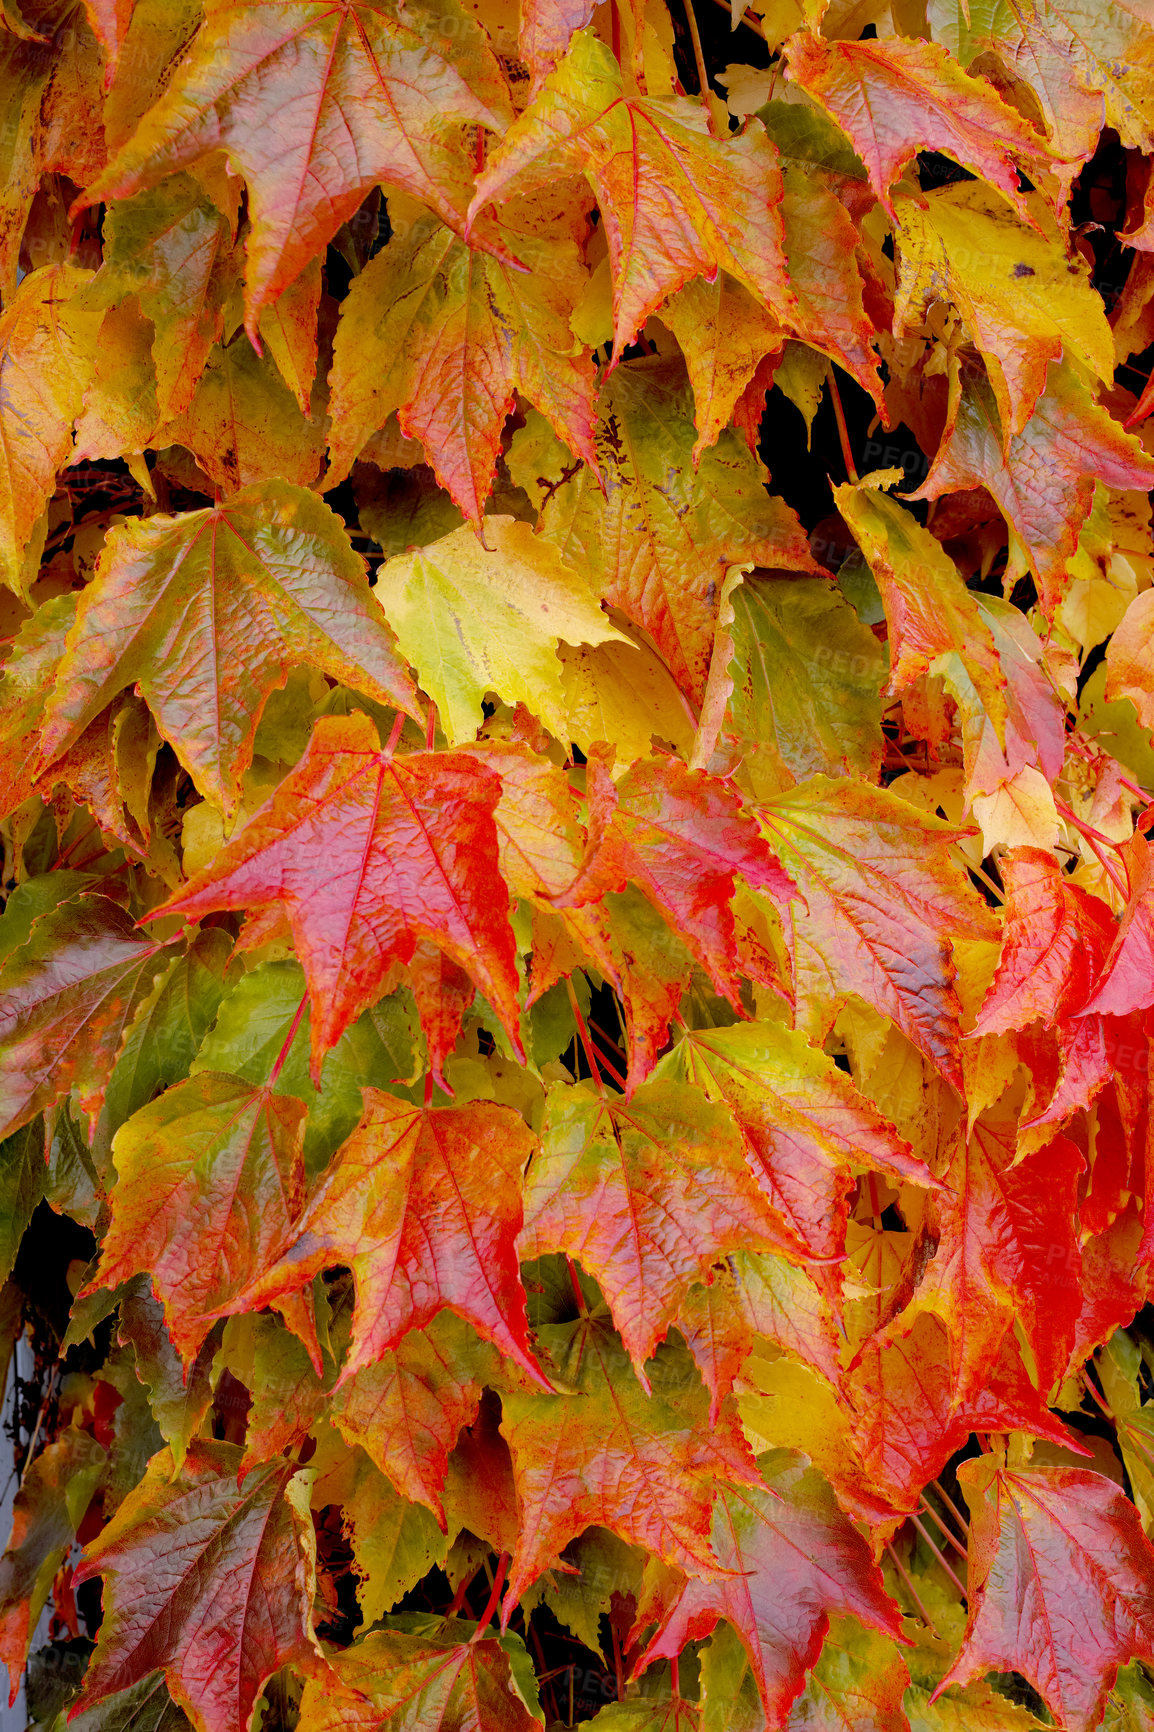 Buy stock photo Autumn - natural background